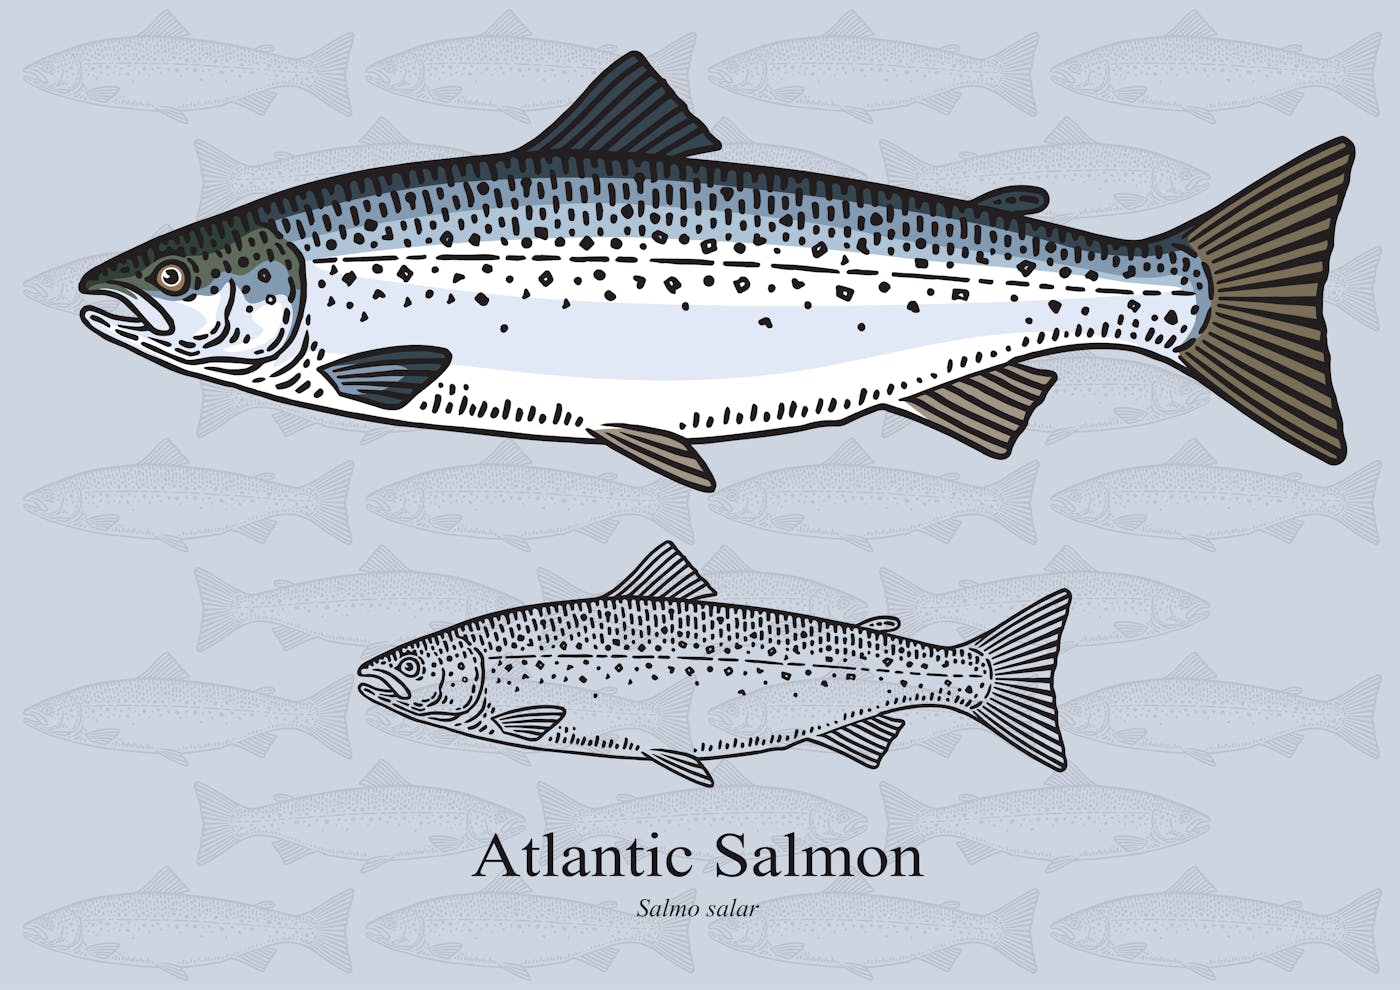 Atlantic Salmon Graphic